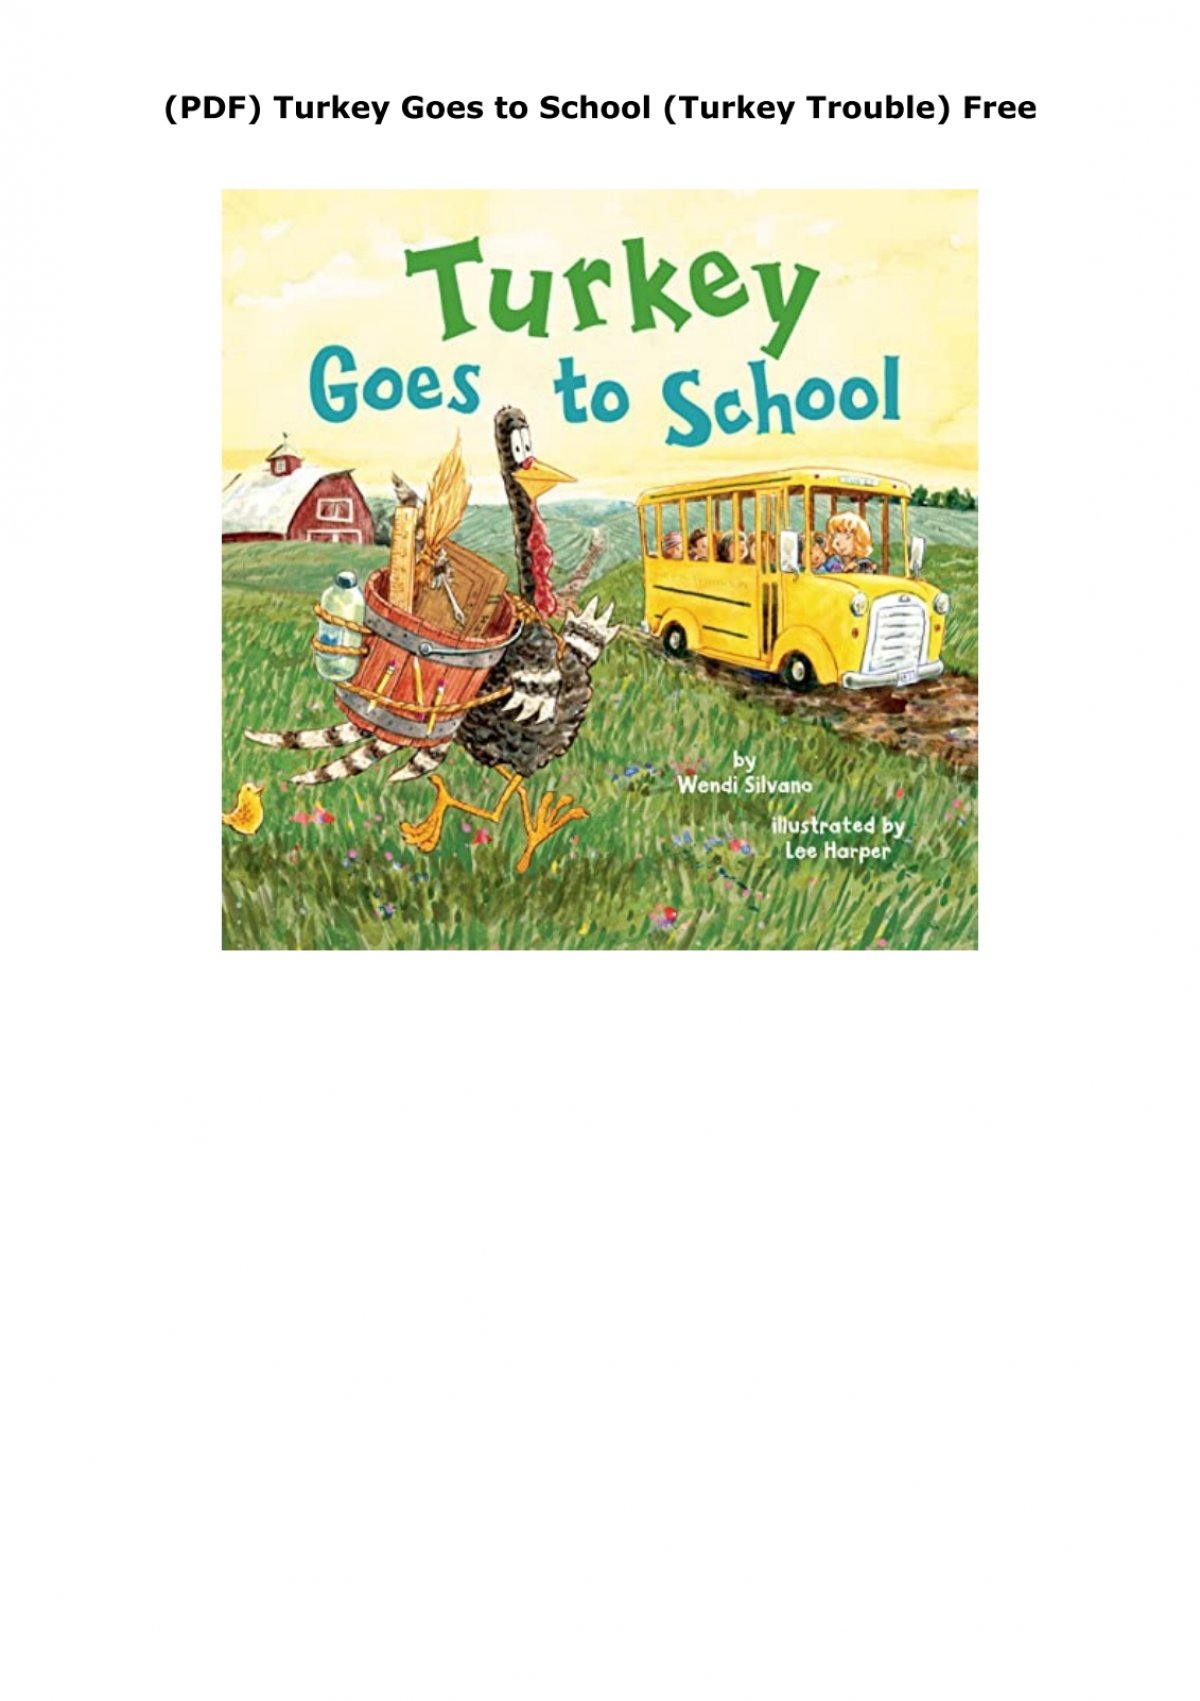 pdf-turkey-goes-to-school-turkey-trouble-free